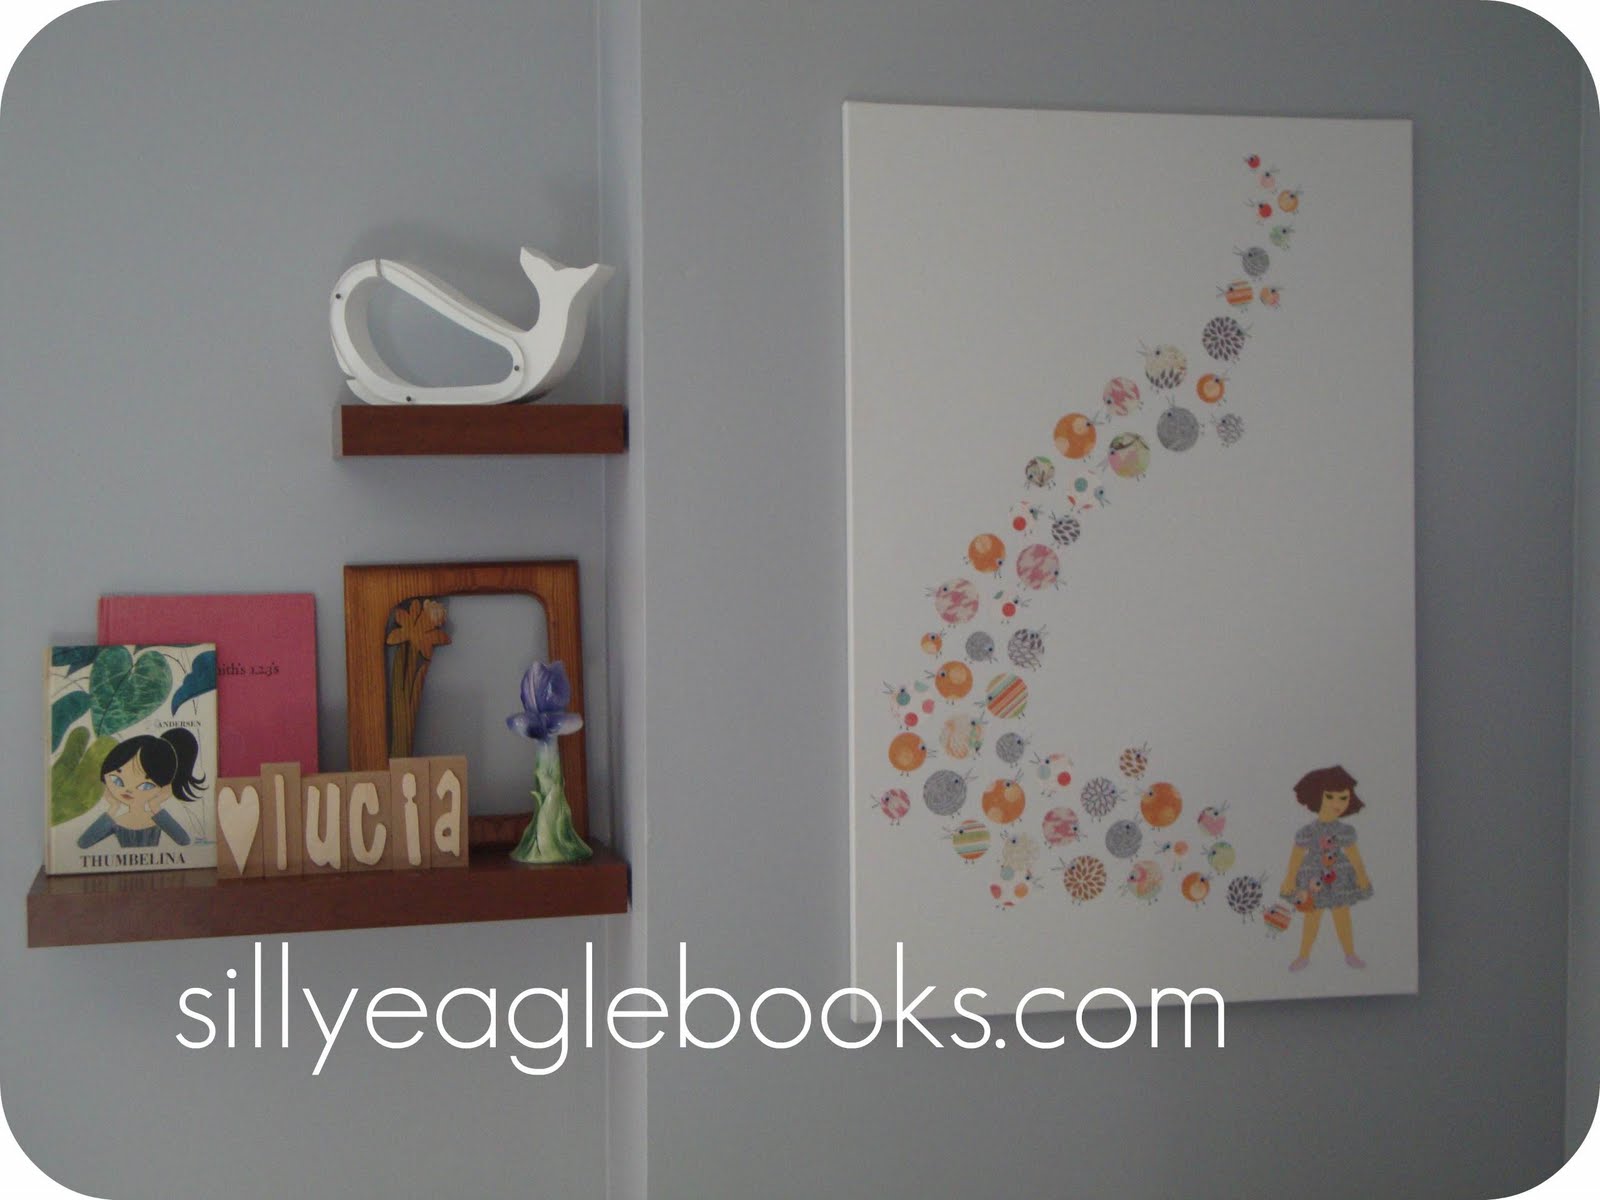 Silly Eagle Books: book-inspired nursery art: button beaks